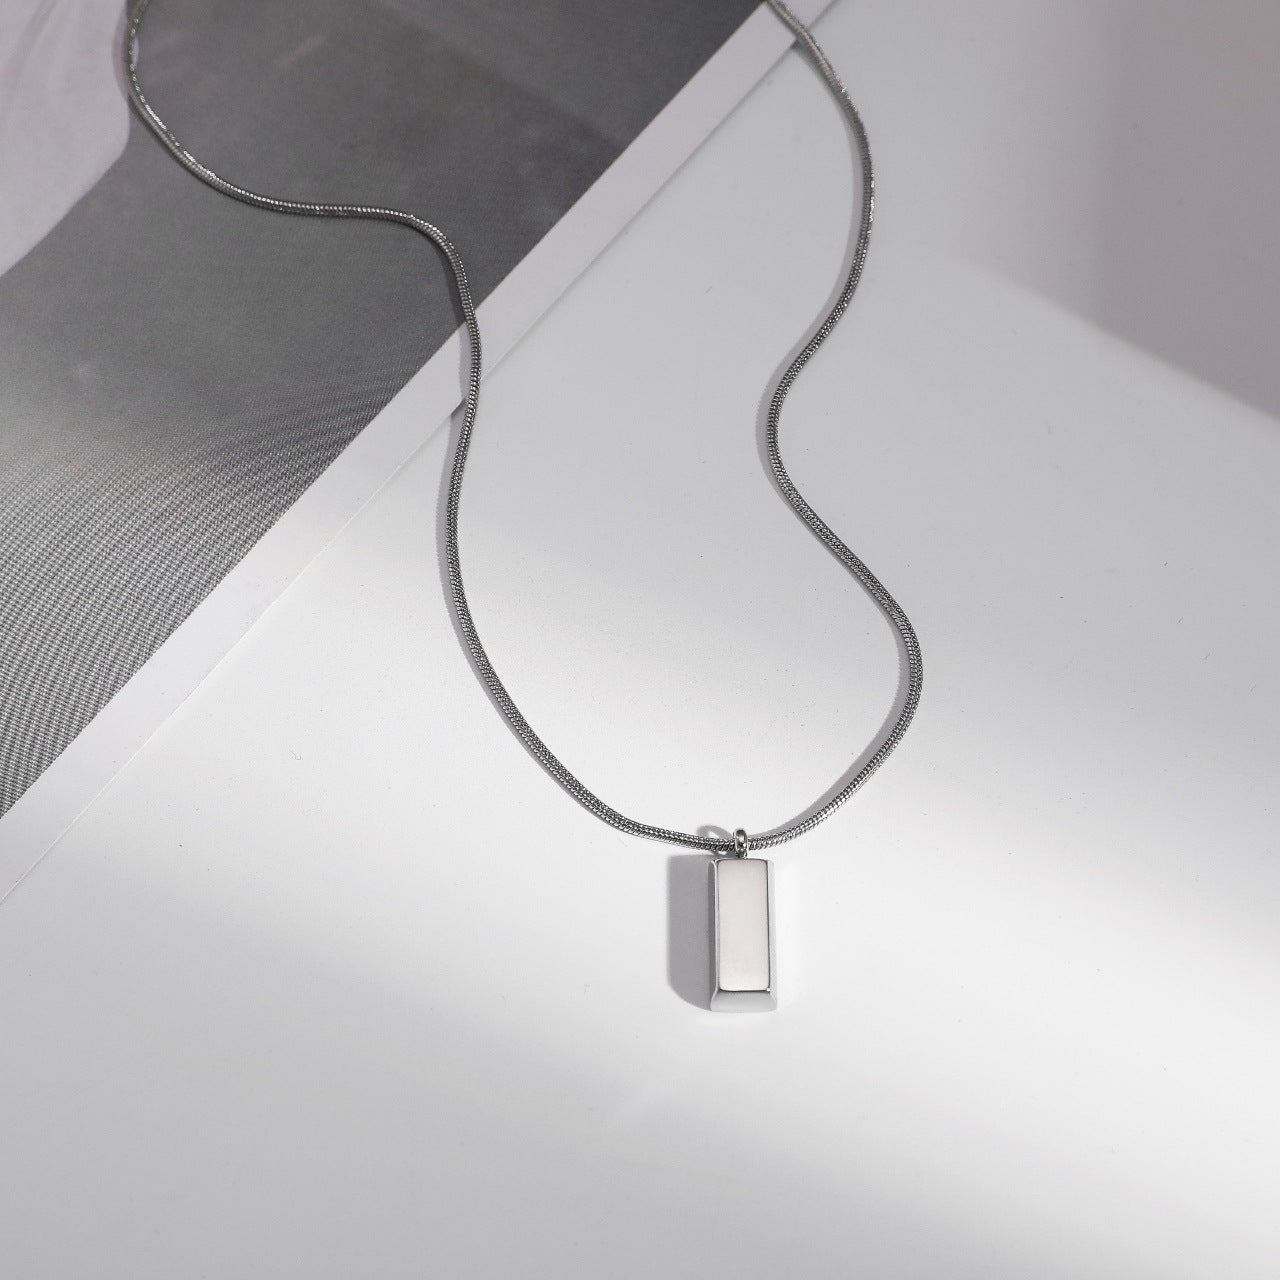 Minimalist cold style silver brick design pendant necklace - Syble's